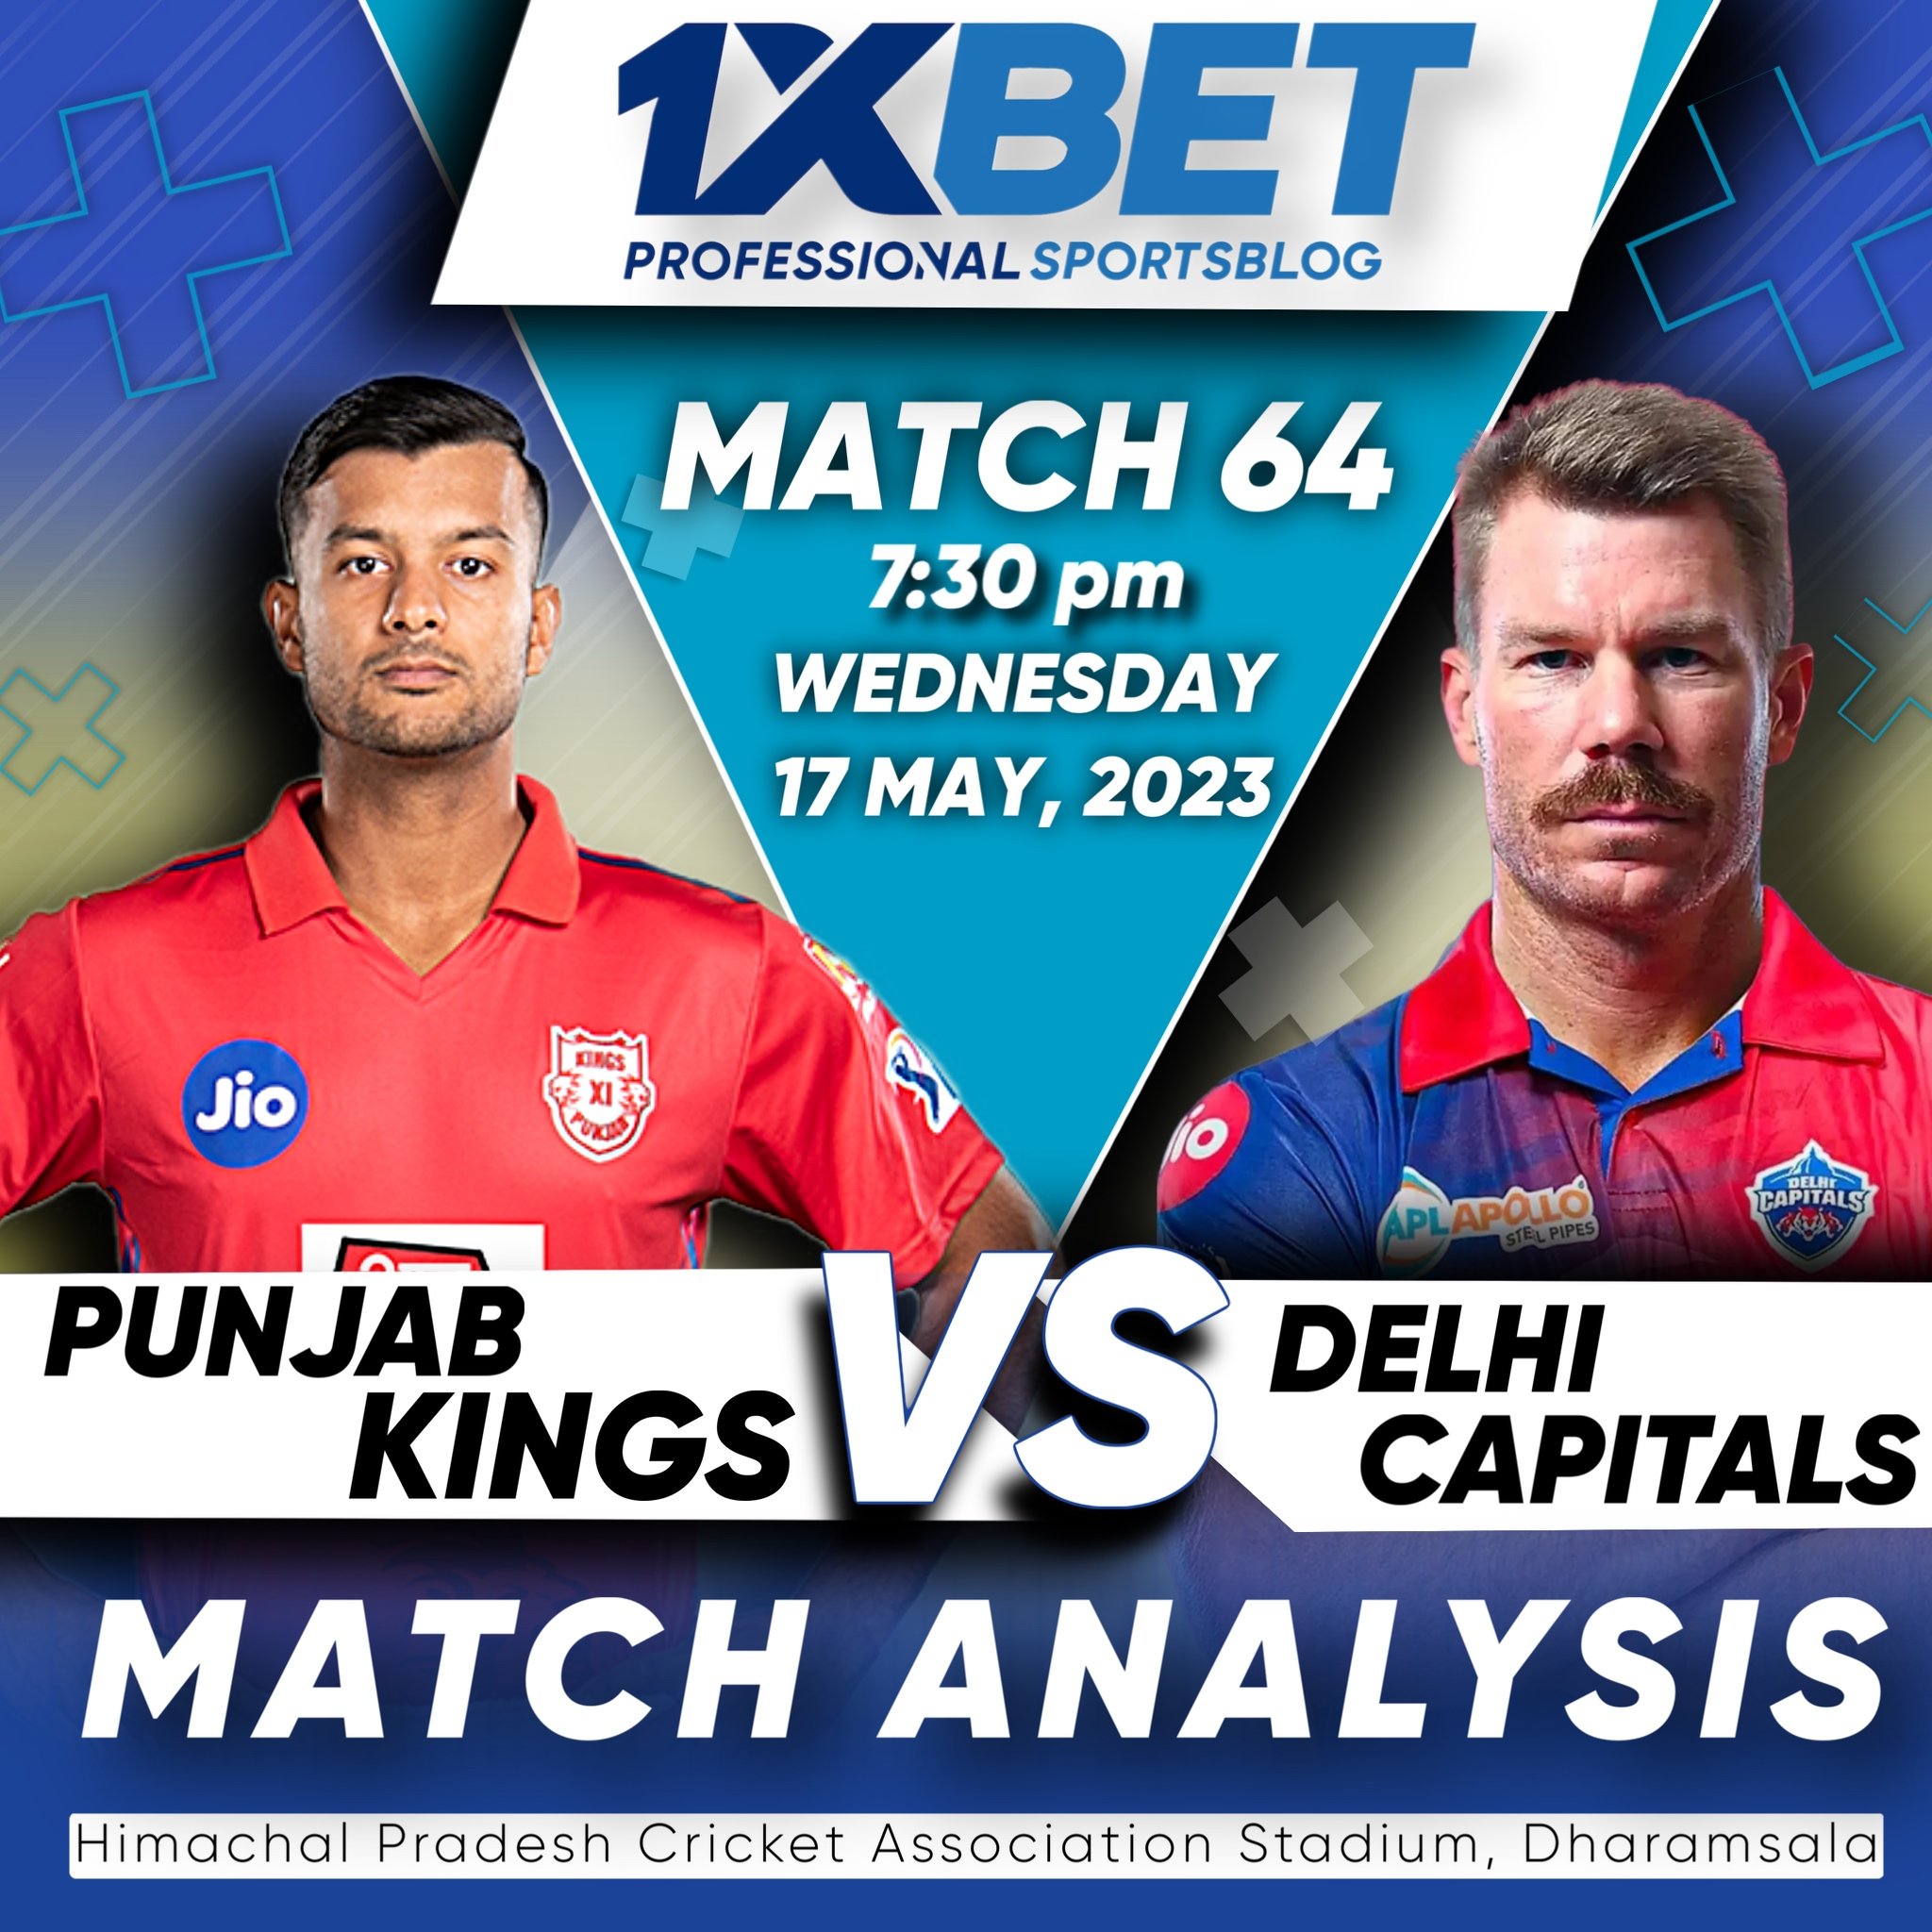 Punjab Kings vs Delhi Capitals, IPL 2023, 64th Match Analysis